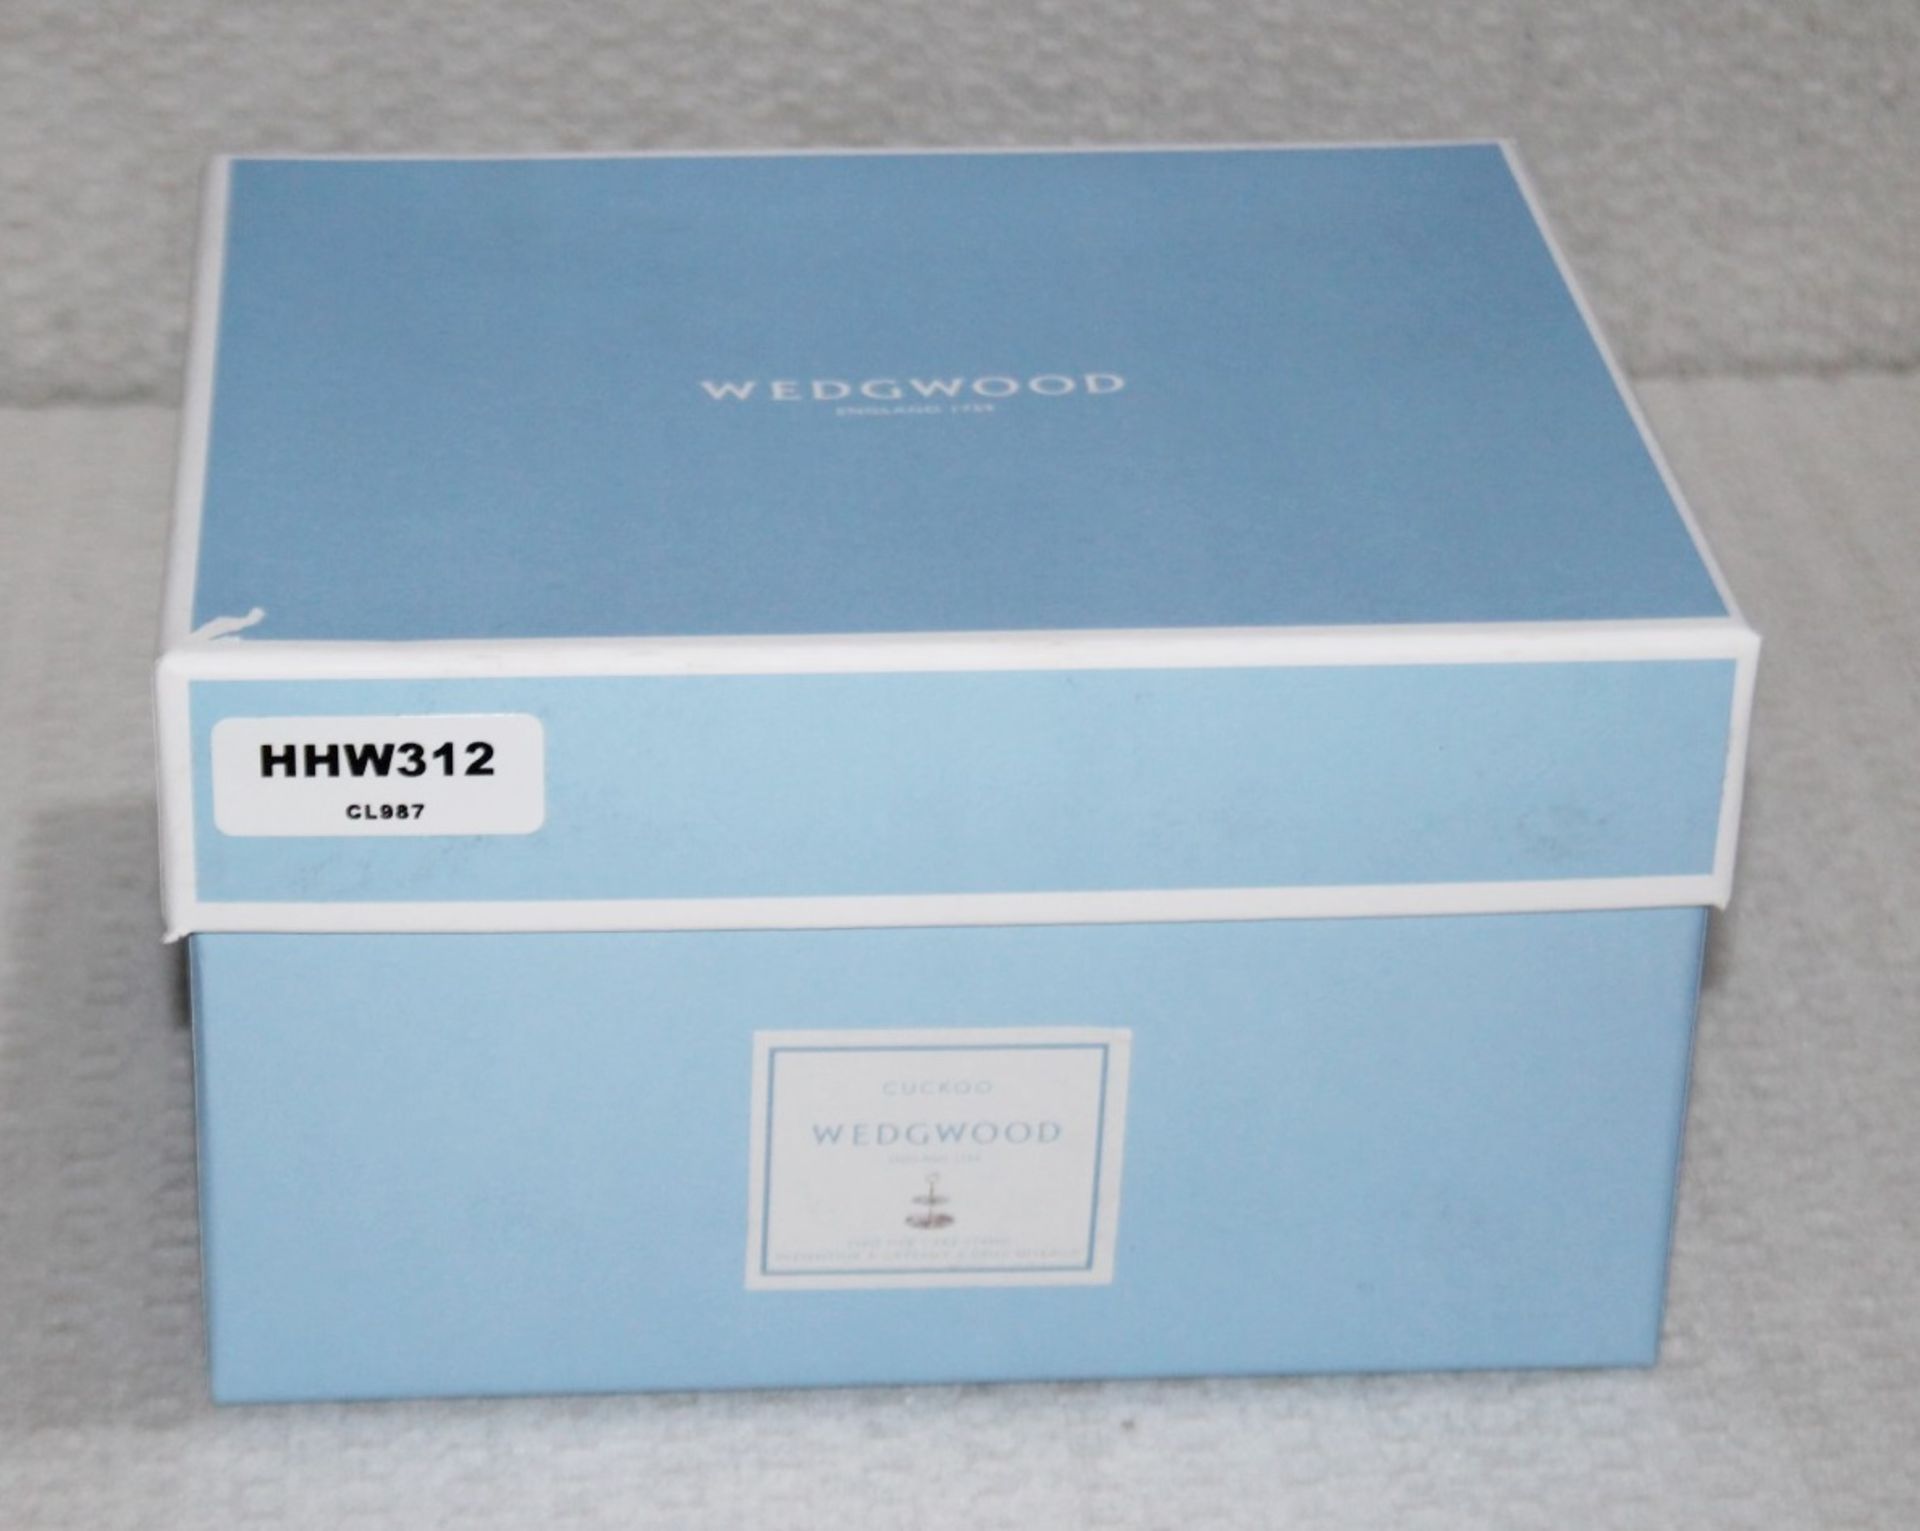 1 x WEDGWOOD 'Harlequin Cuckoo' Two-Tier Bone China Cake Stand - Original Price £95.00 - Unused - Image 4 of 12